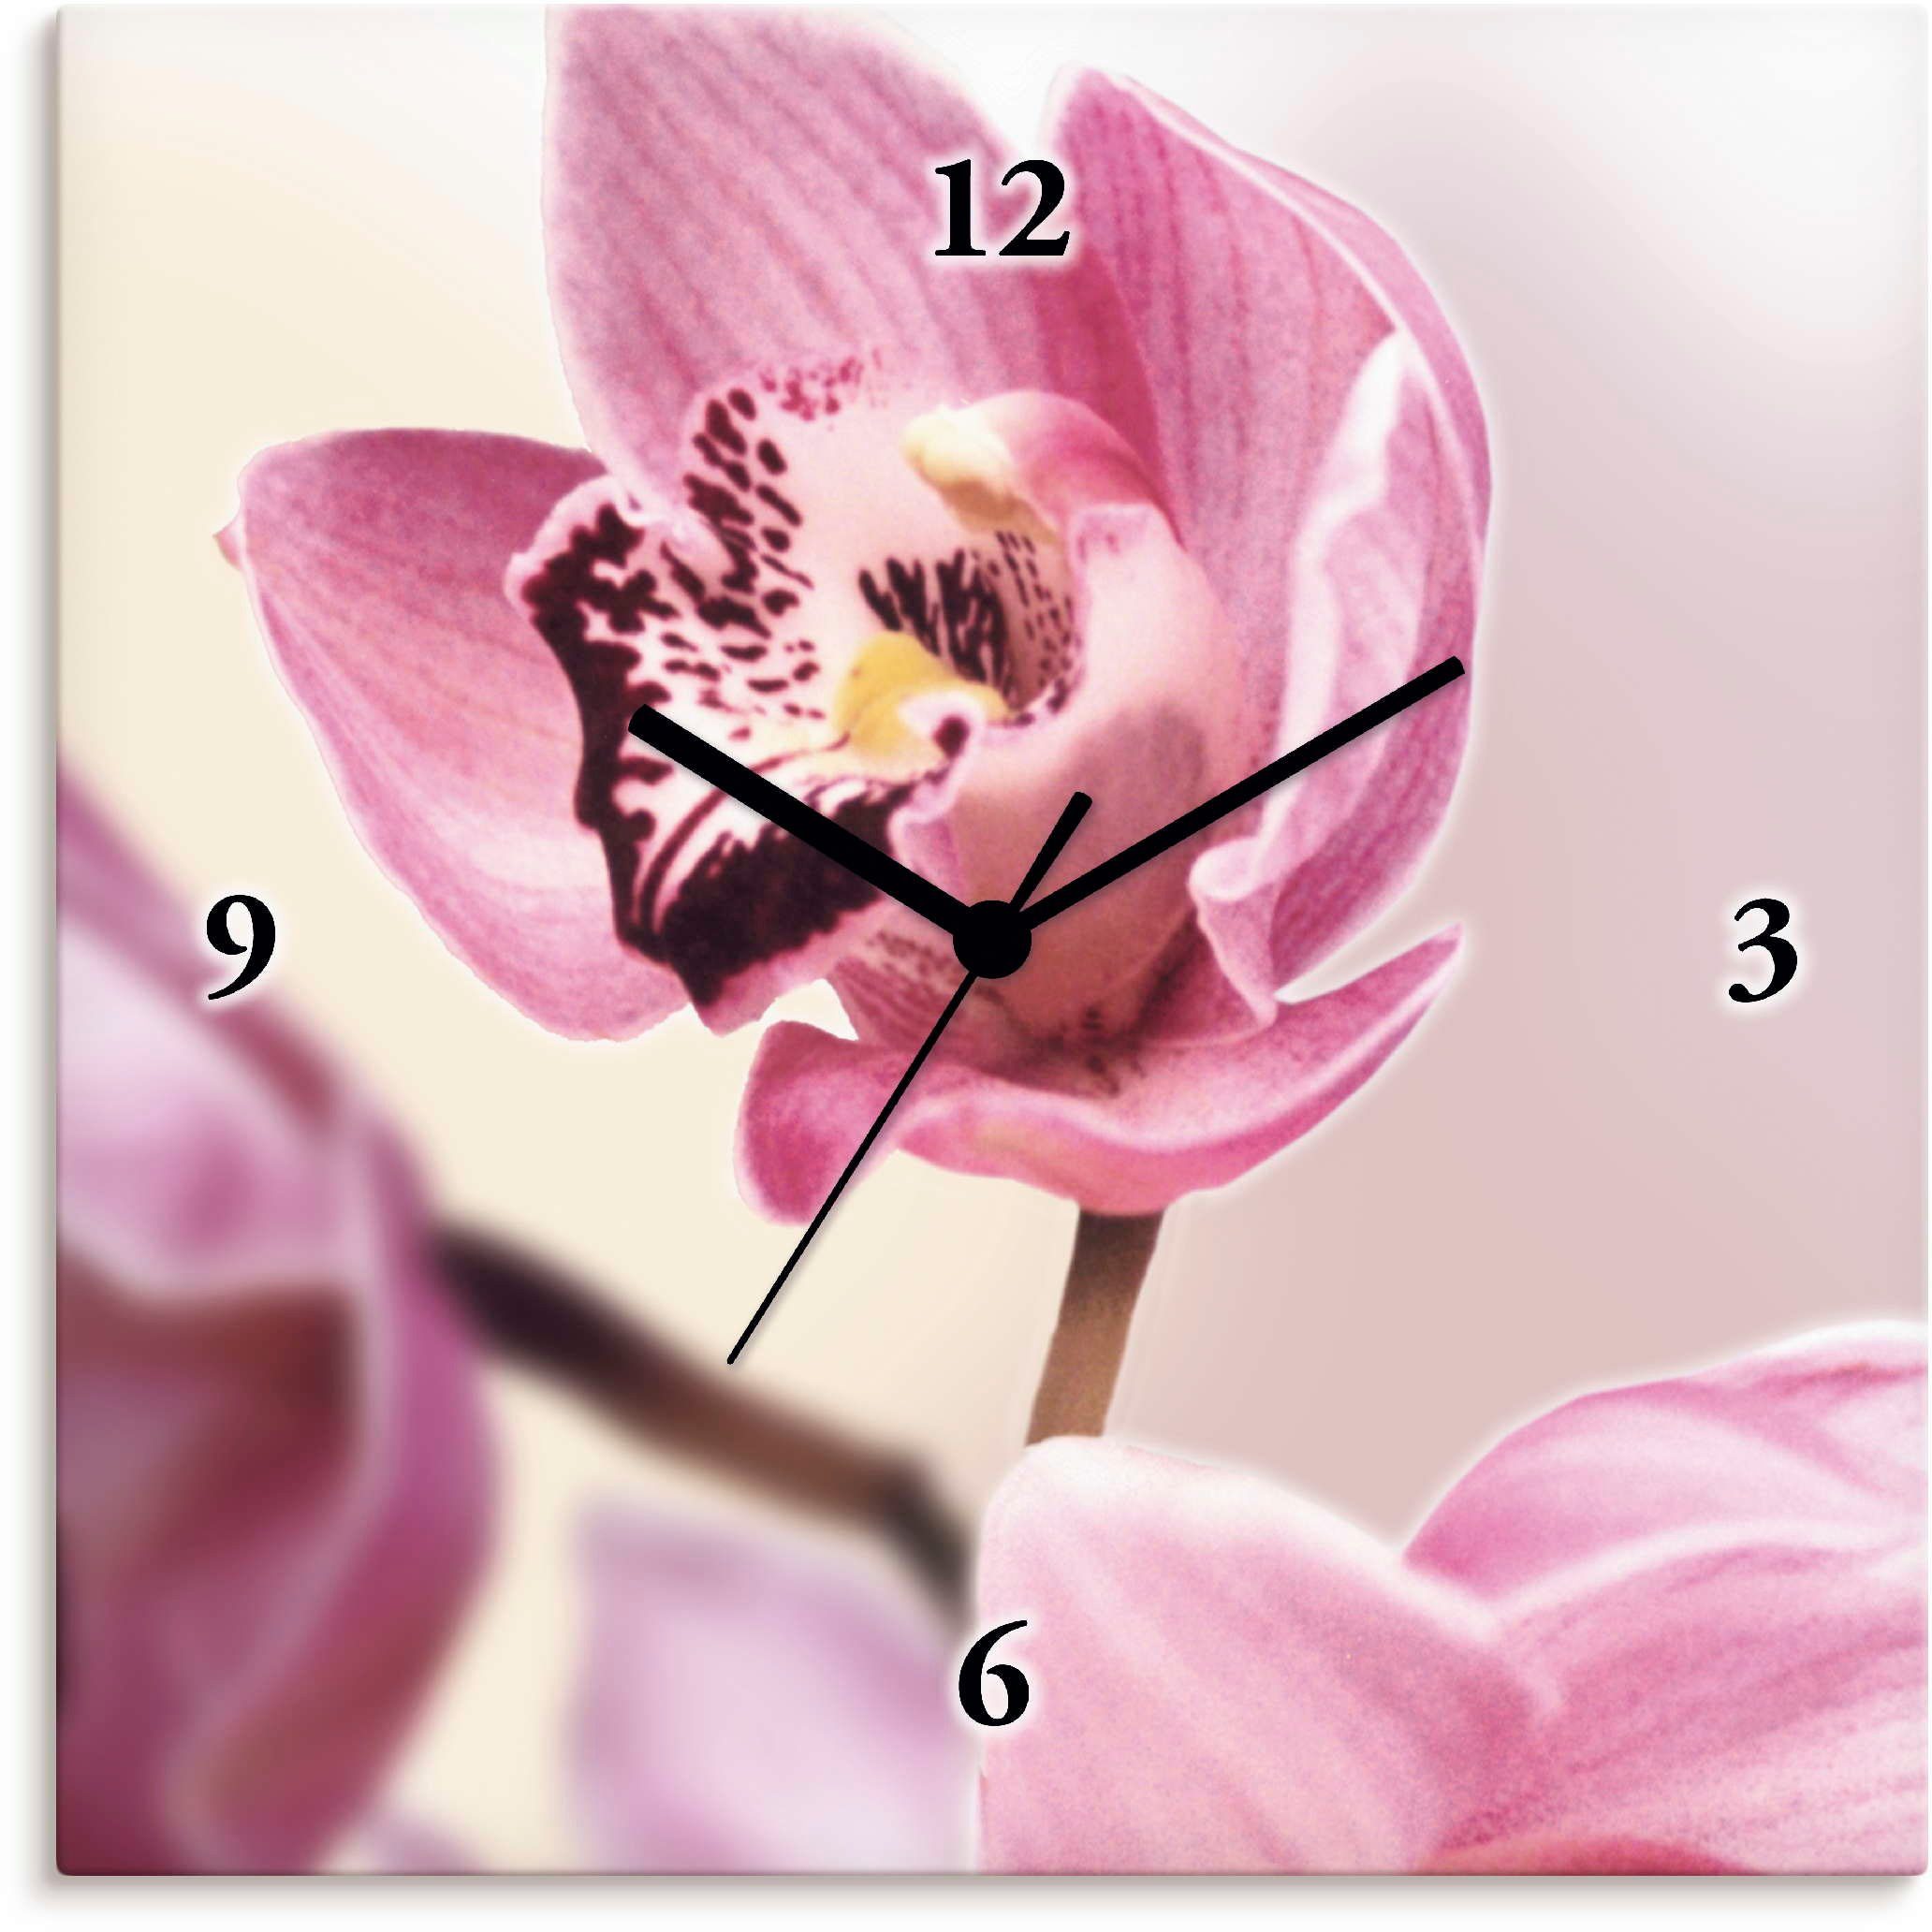 Artland Wandklok Roze orchidee